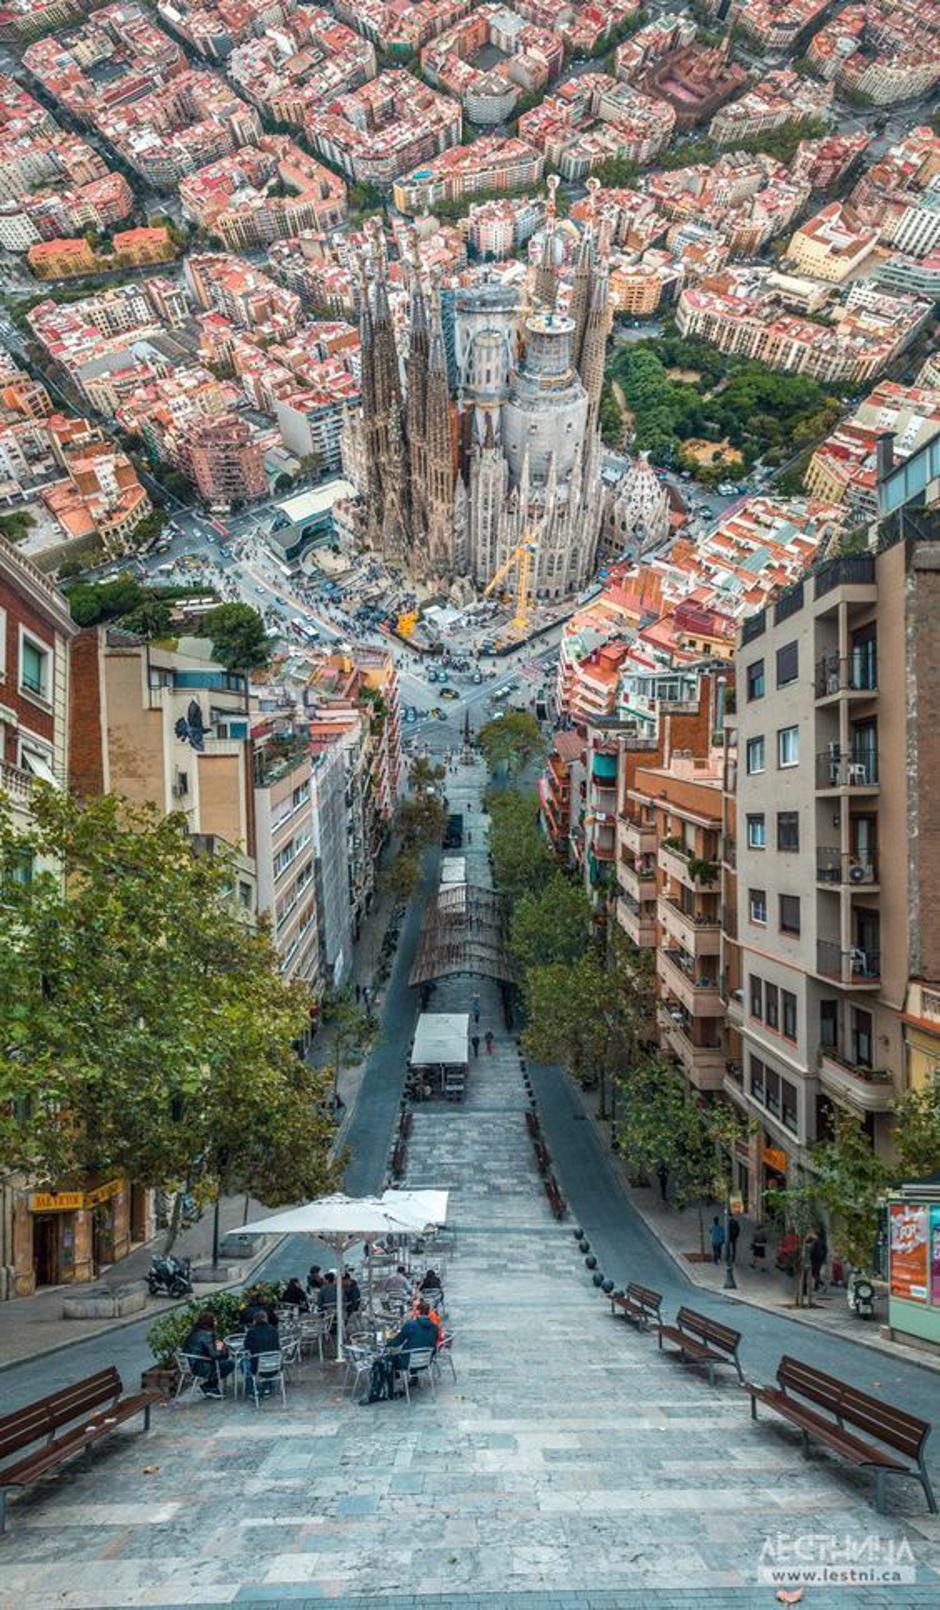 Barcelona | Author: Pinterest